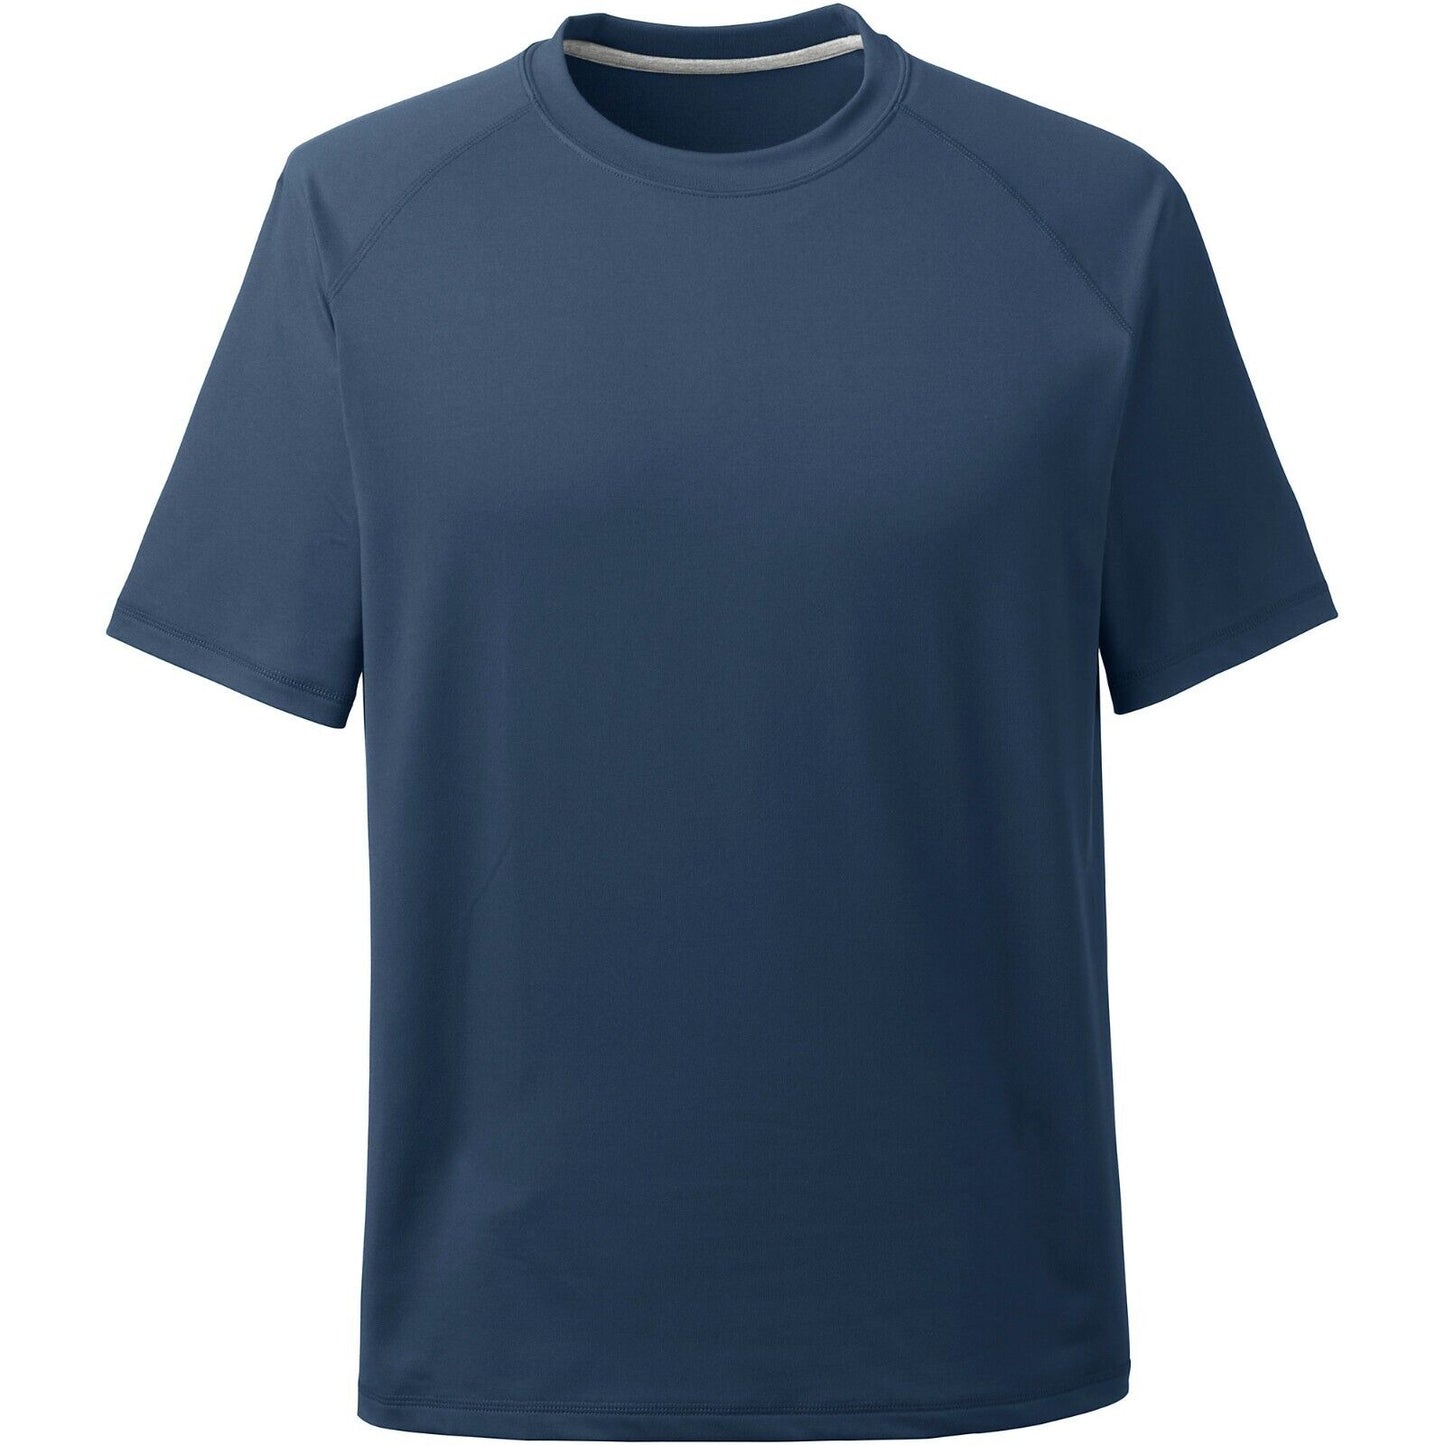 Men's Short Sleeve Active Gym T-shirt Size M